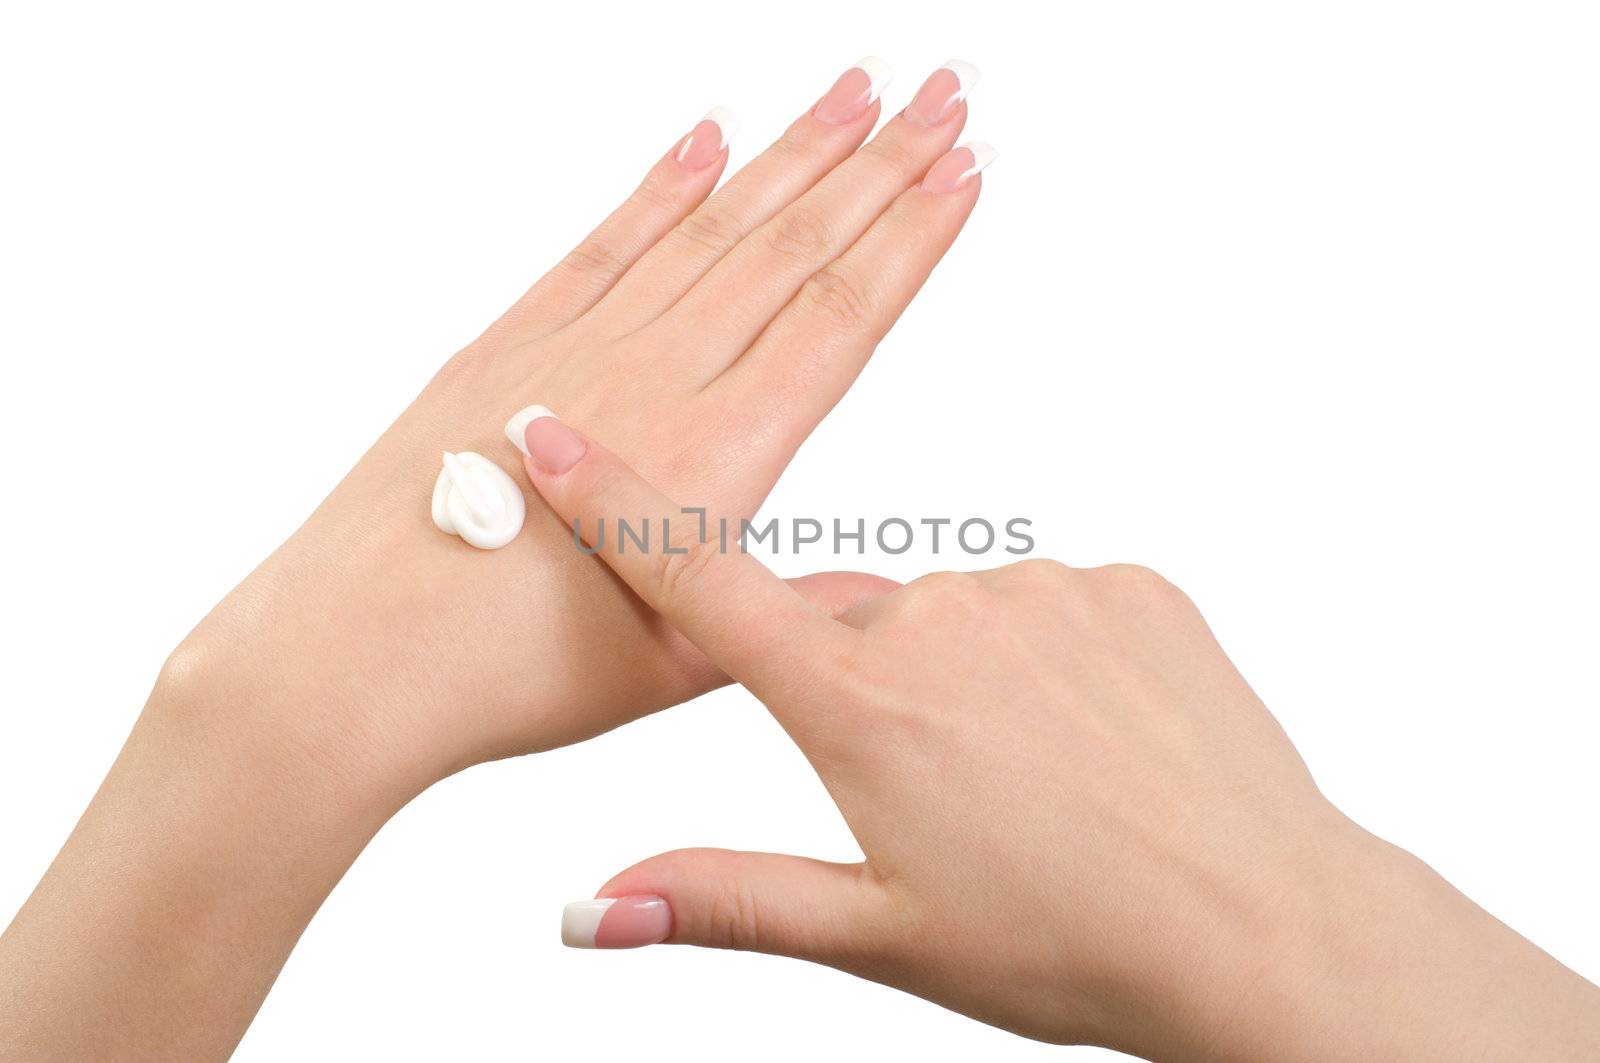 Applying hand cream. by kromeshnik